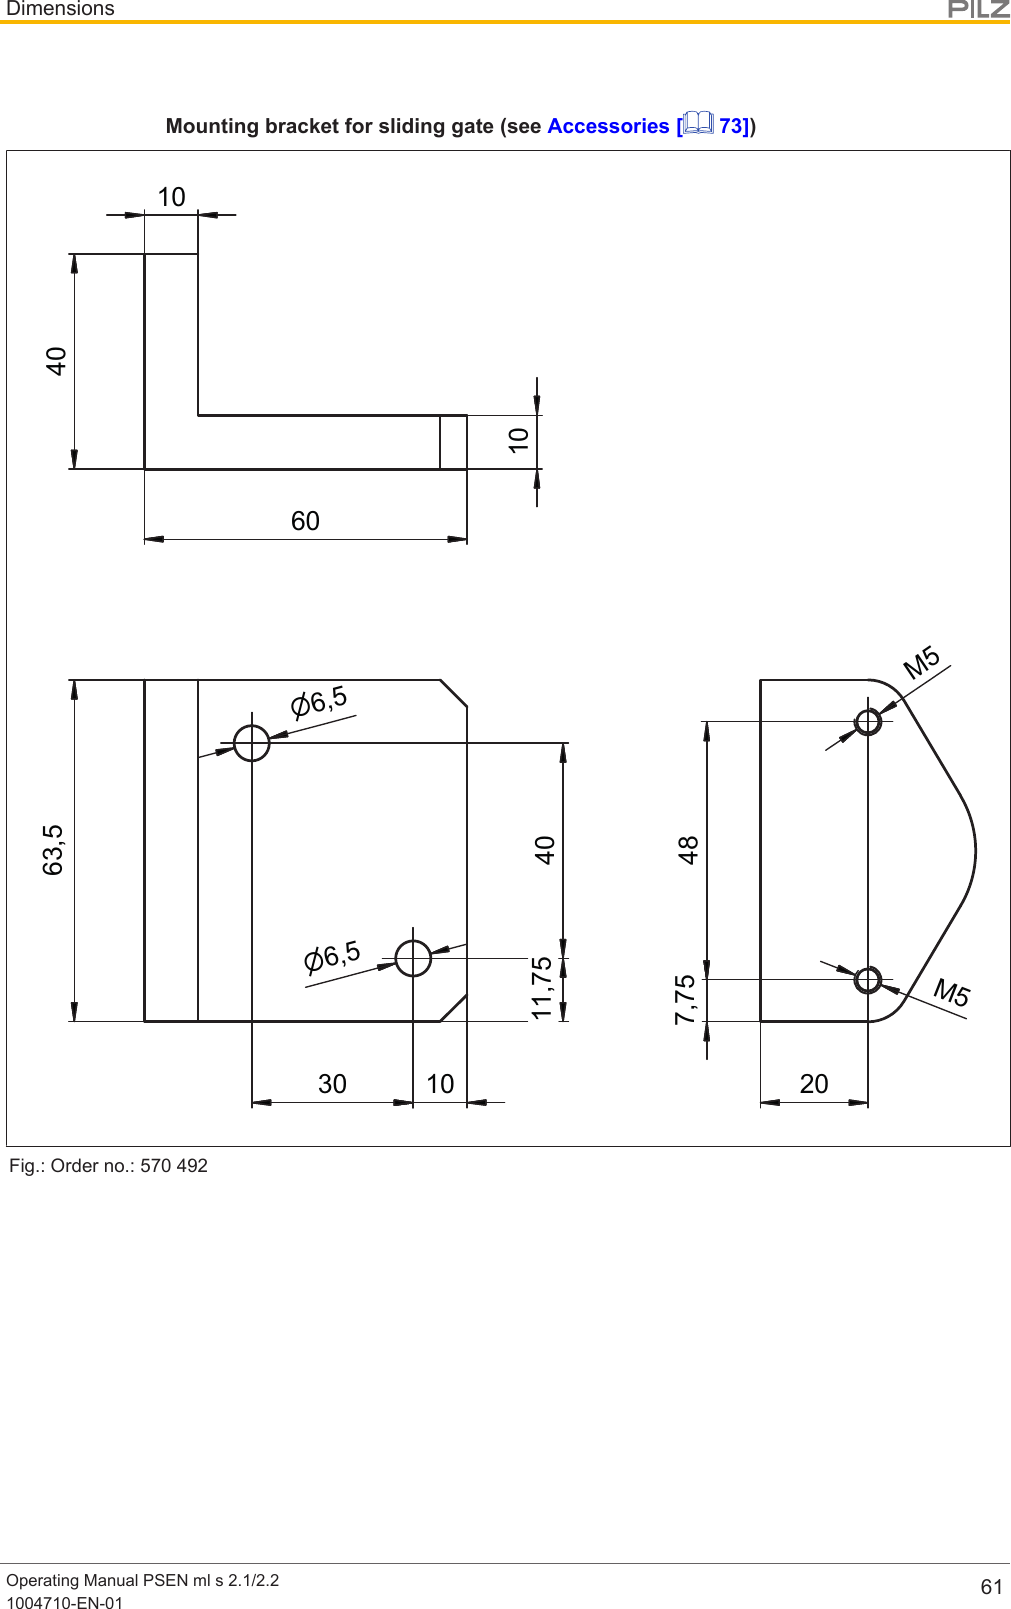 DimensionsOperating Manual PSEN ml s 2.1/2.21004710-EN-01 61Mounting bracket for sliding gate (see Accessories [  73])4030 1011,7540n6,5n6,563,5101060207,7548M5M5Fig.: Order no.: 570492